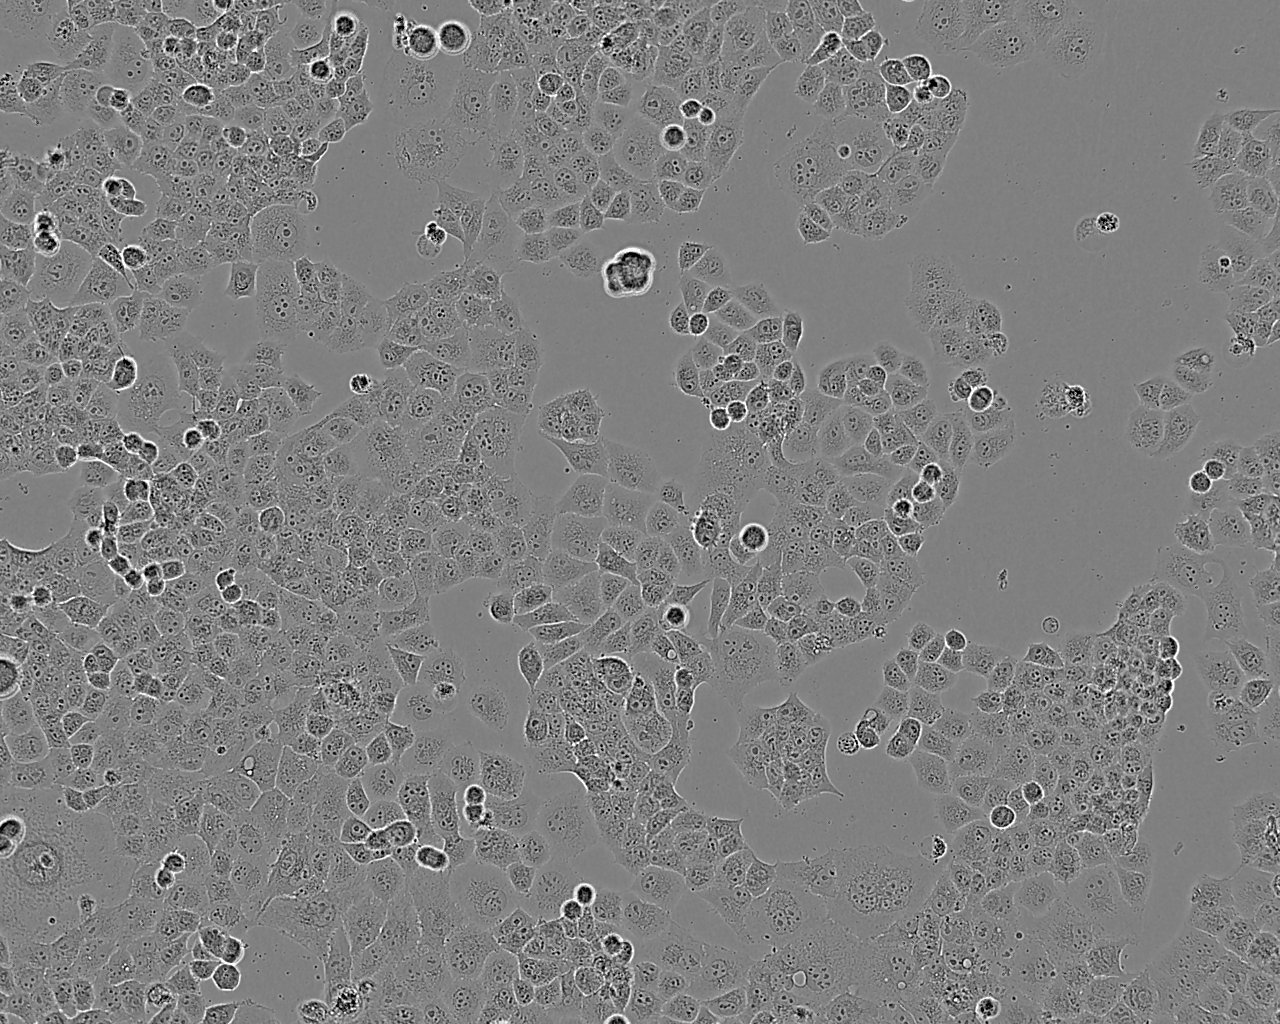 BS-C-1 cell line非洲绿猴肾细胞系